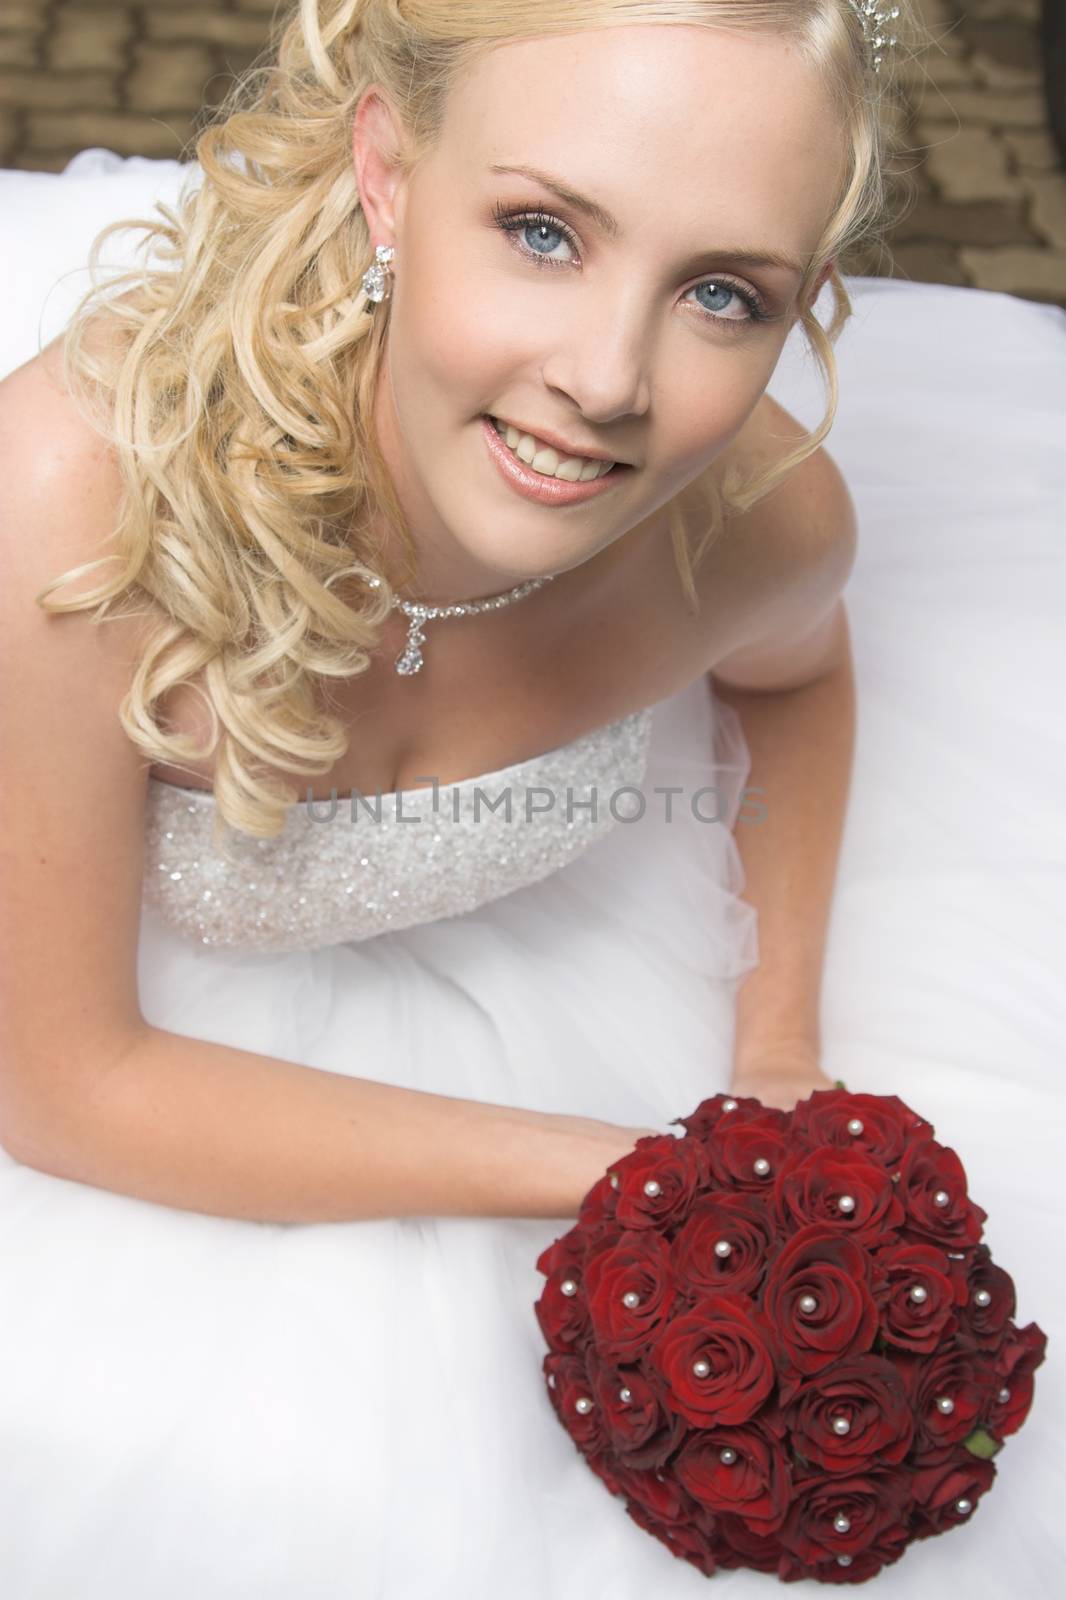 Beautiful Blond Bride by carlush